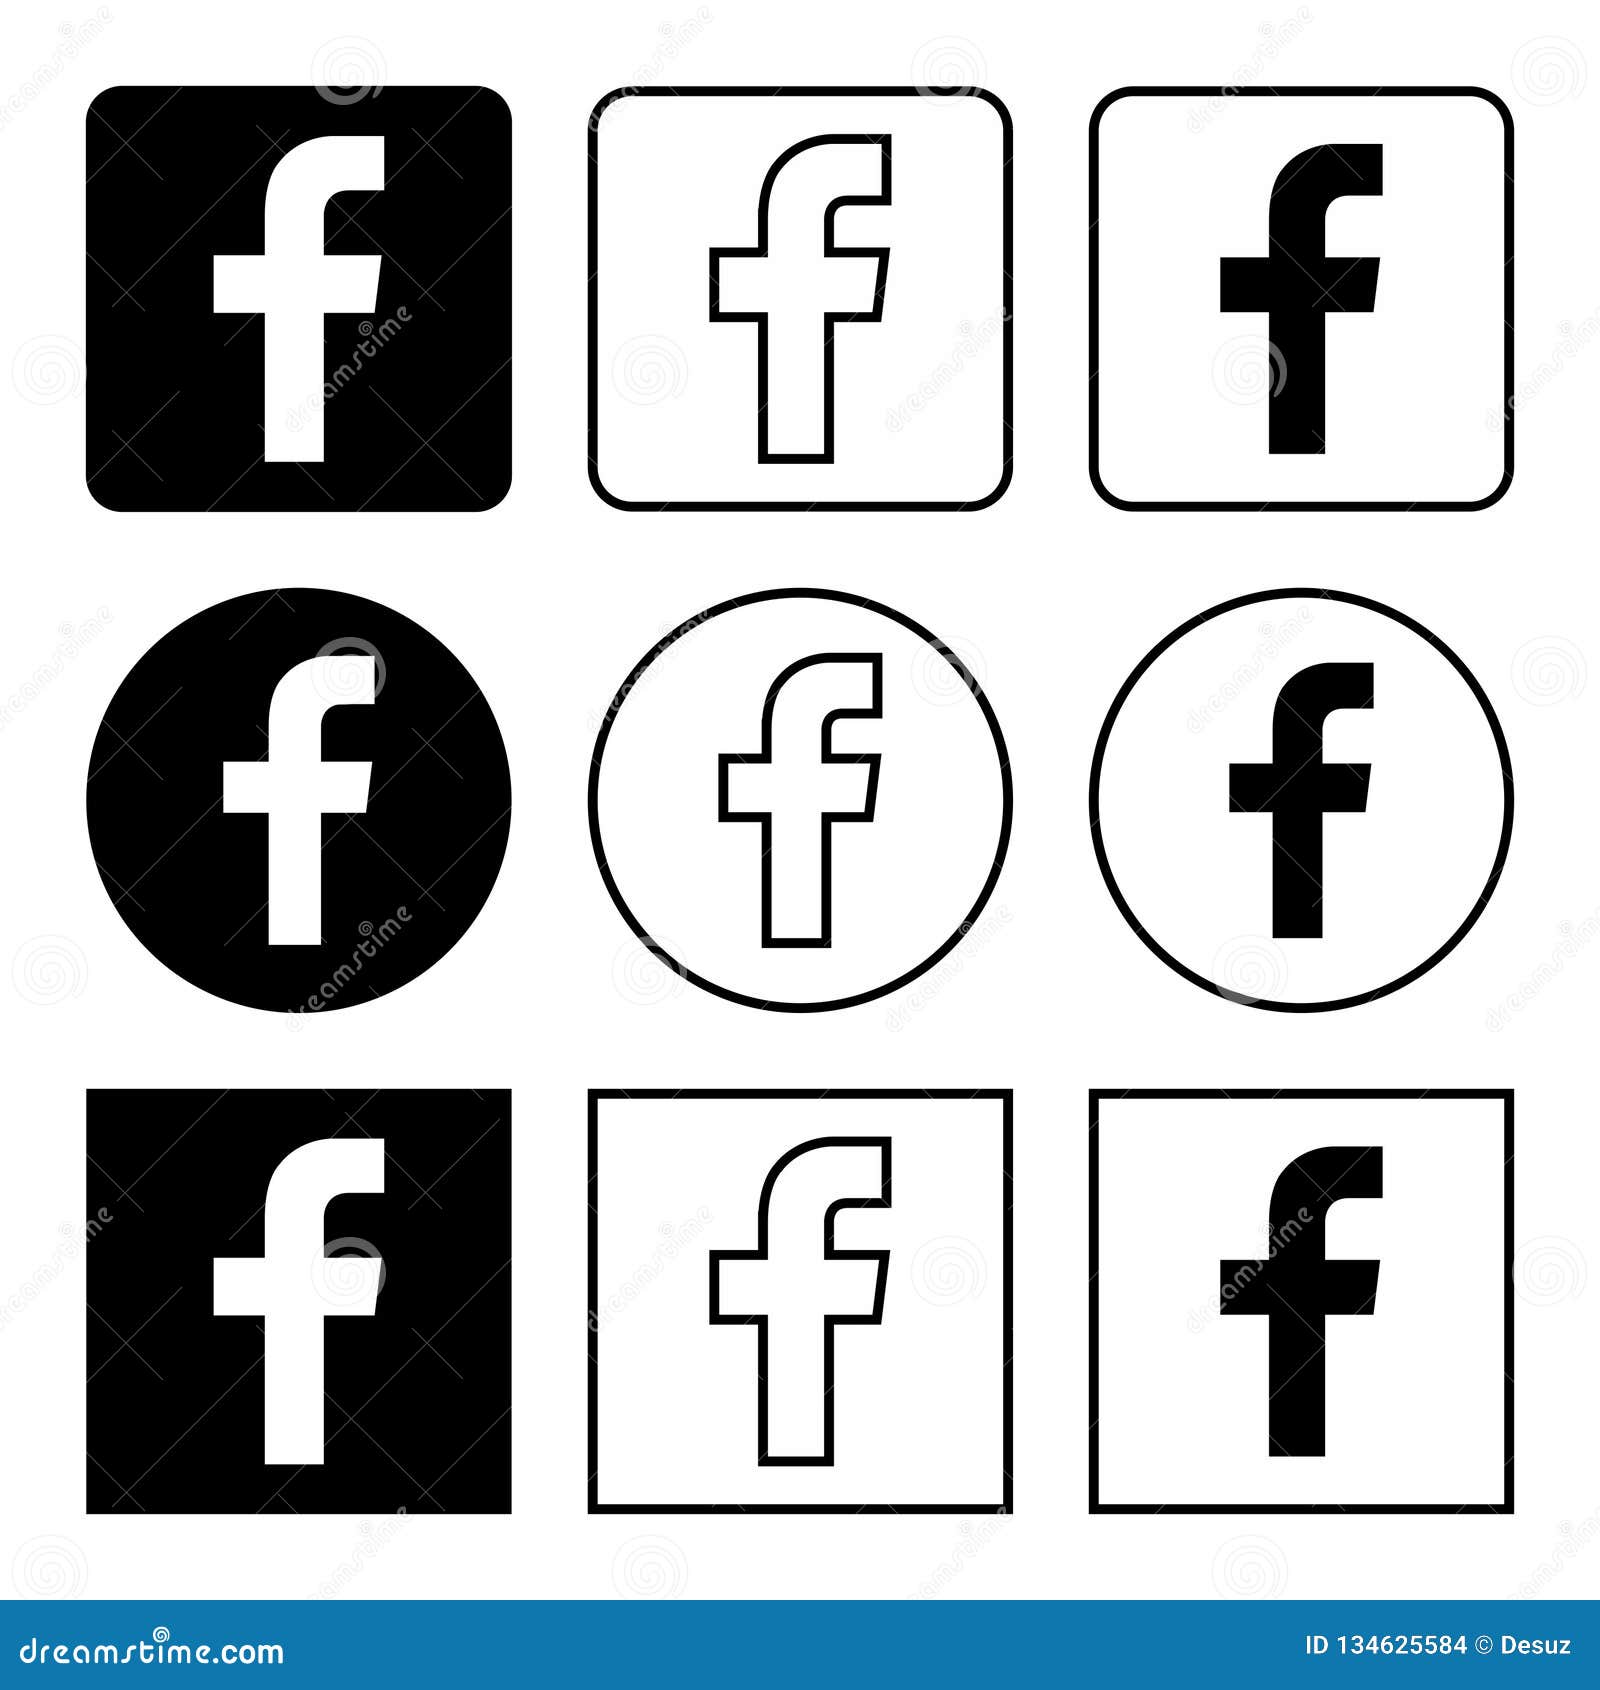 Facebook Icons Set Black Editorial Stock Image Illustration Of Finger